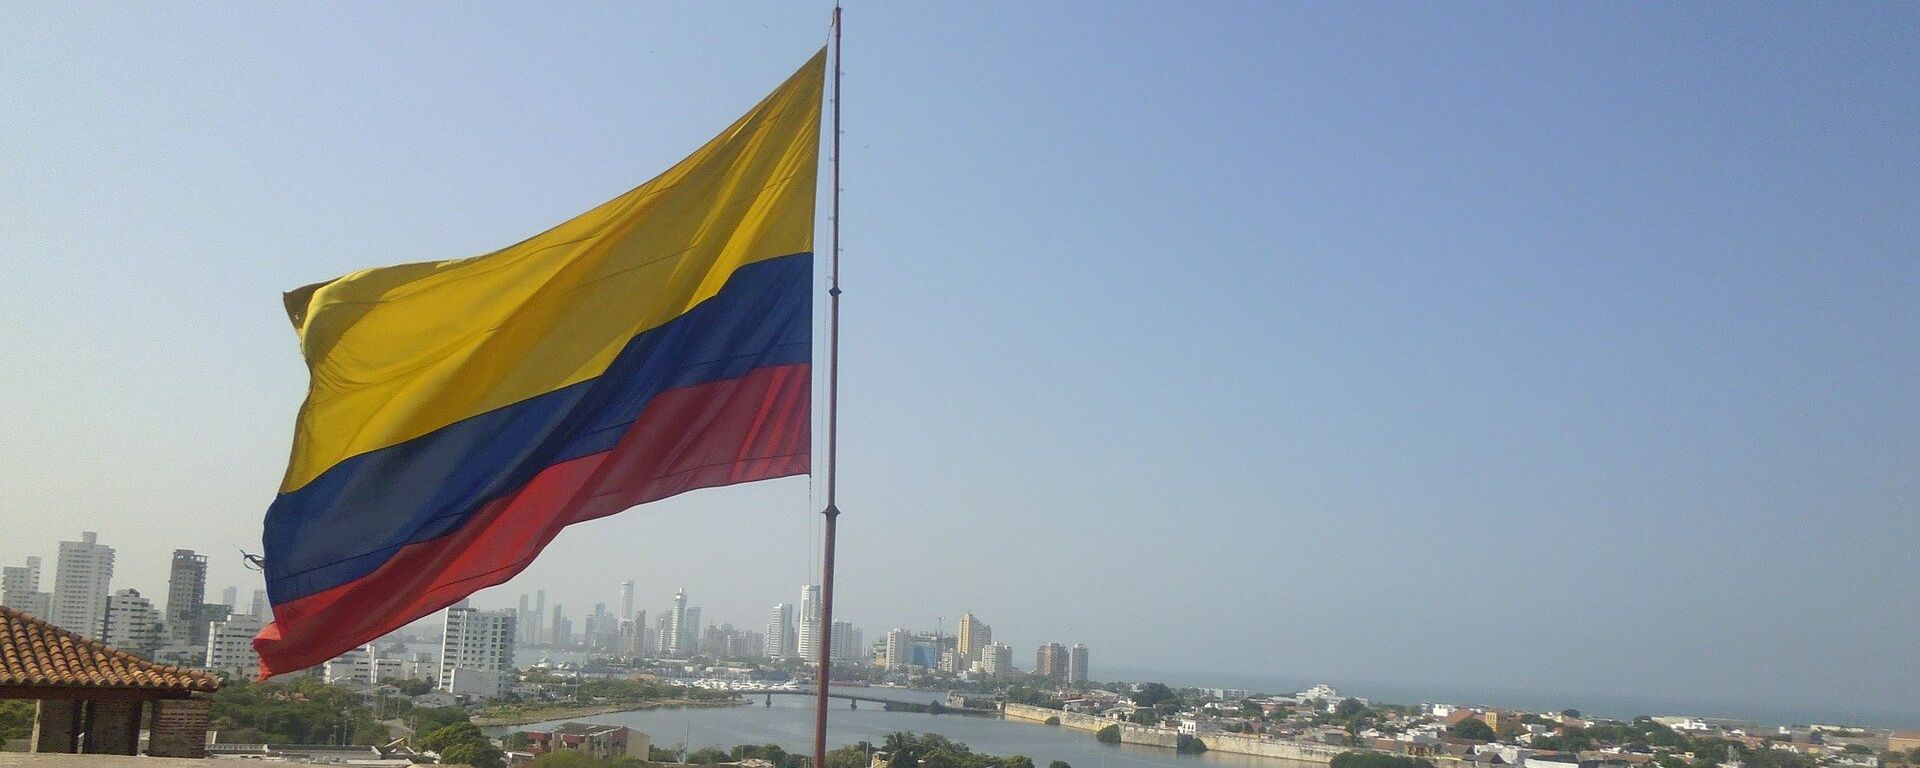 Bandera de Colombia - Sputnik Mundo, 1920, 05.02.2021